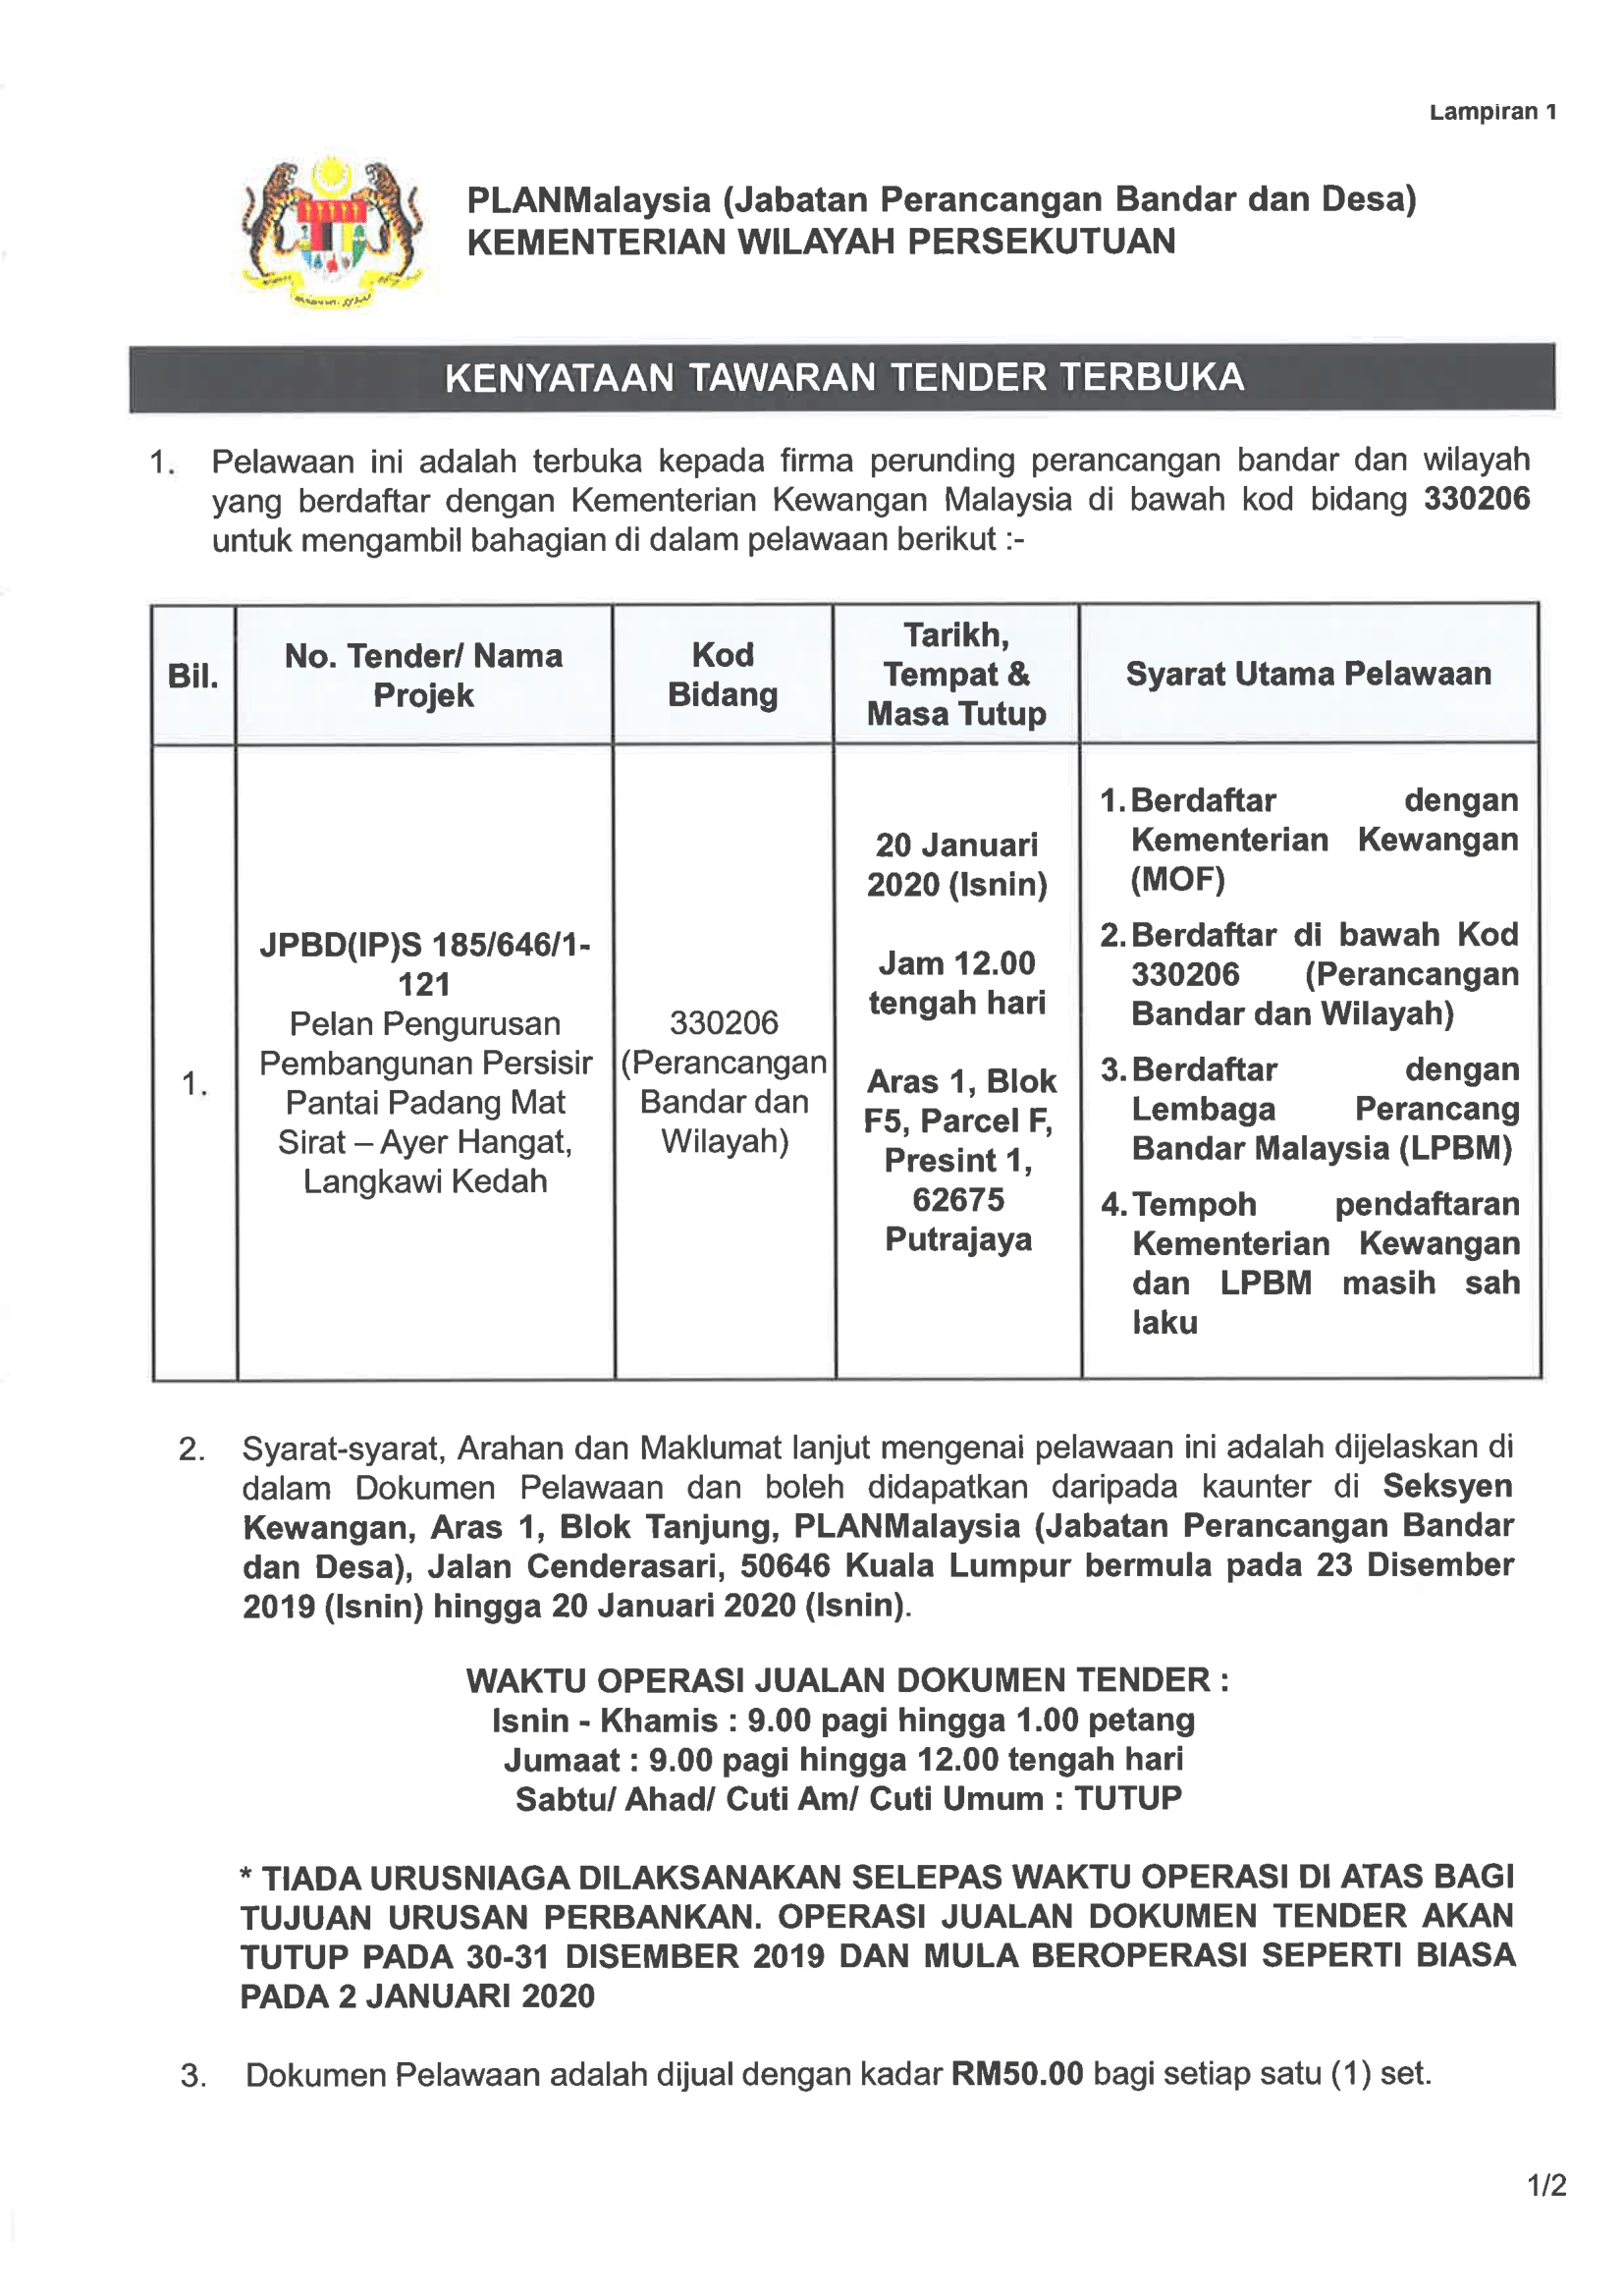 Iklan tender bagi Pelan Pembangunan Persisisr Pantai Padang Mat Sirat  Ayer Hangat,Langkawi Kedah (PLANMalaysia)